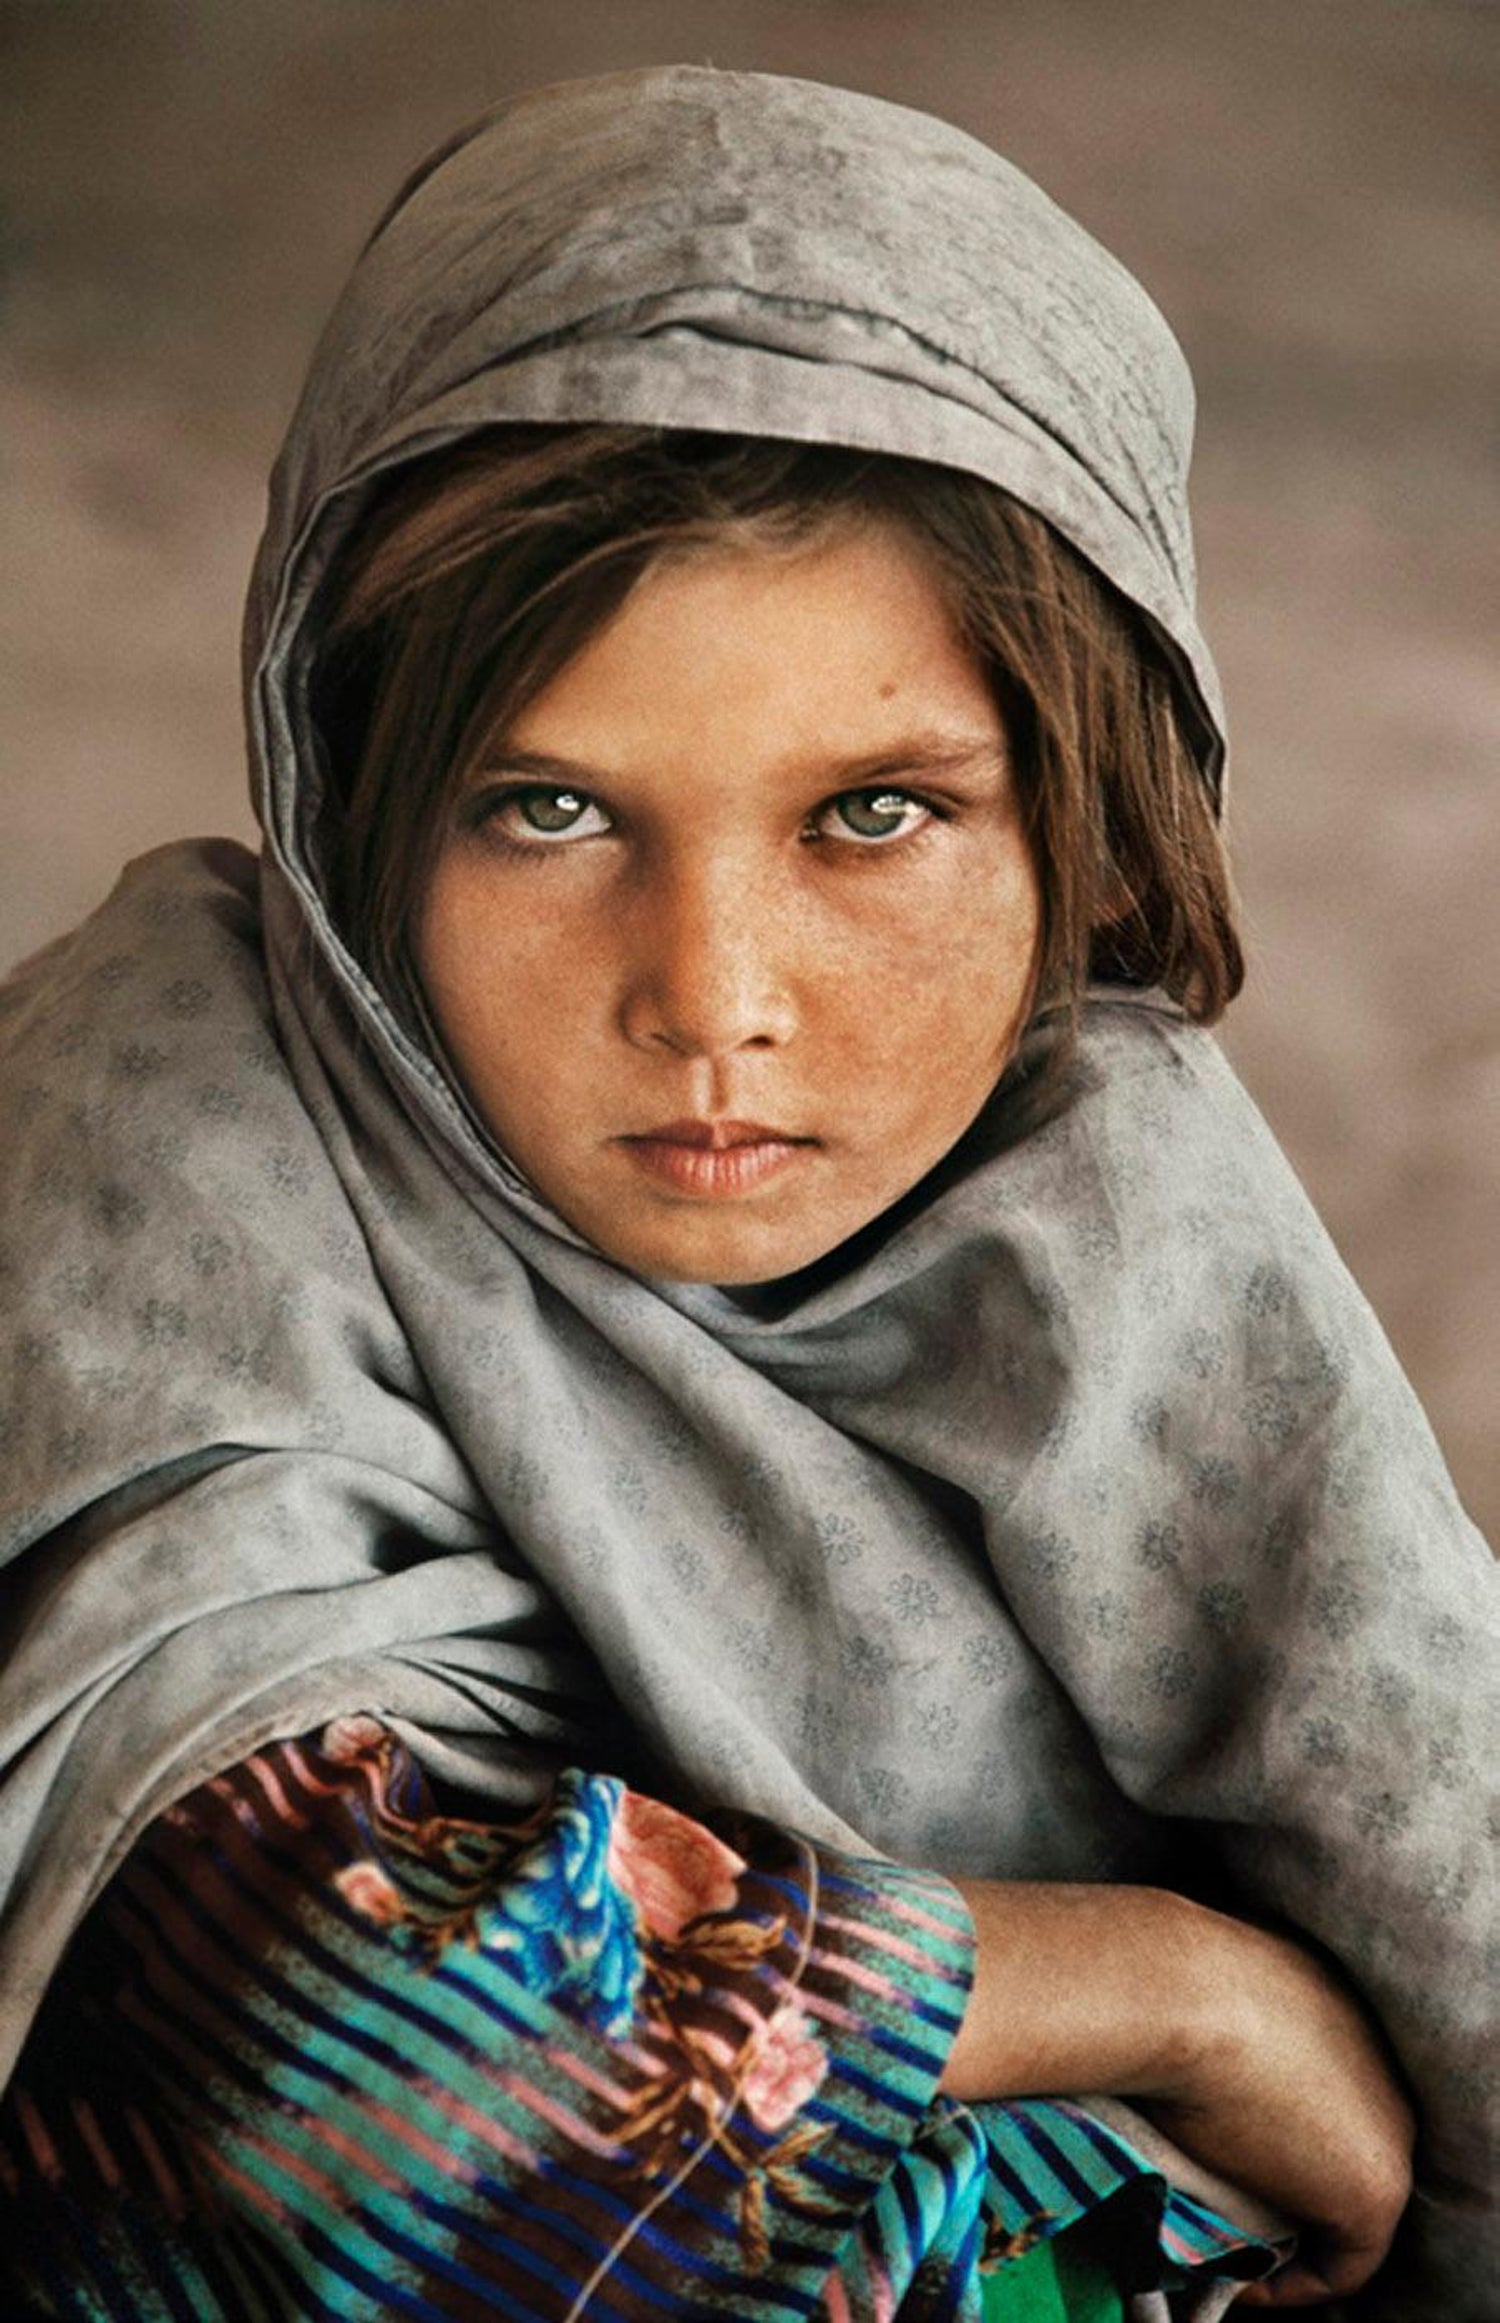 Steve McCurry - Steve McCurry 'Afghan Nomad Girl' For Sale at 1stDibs